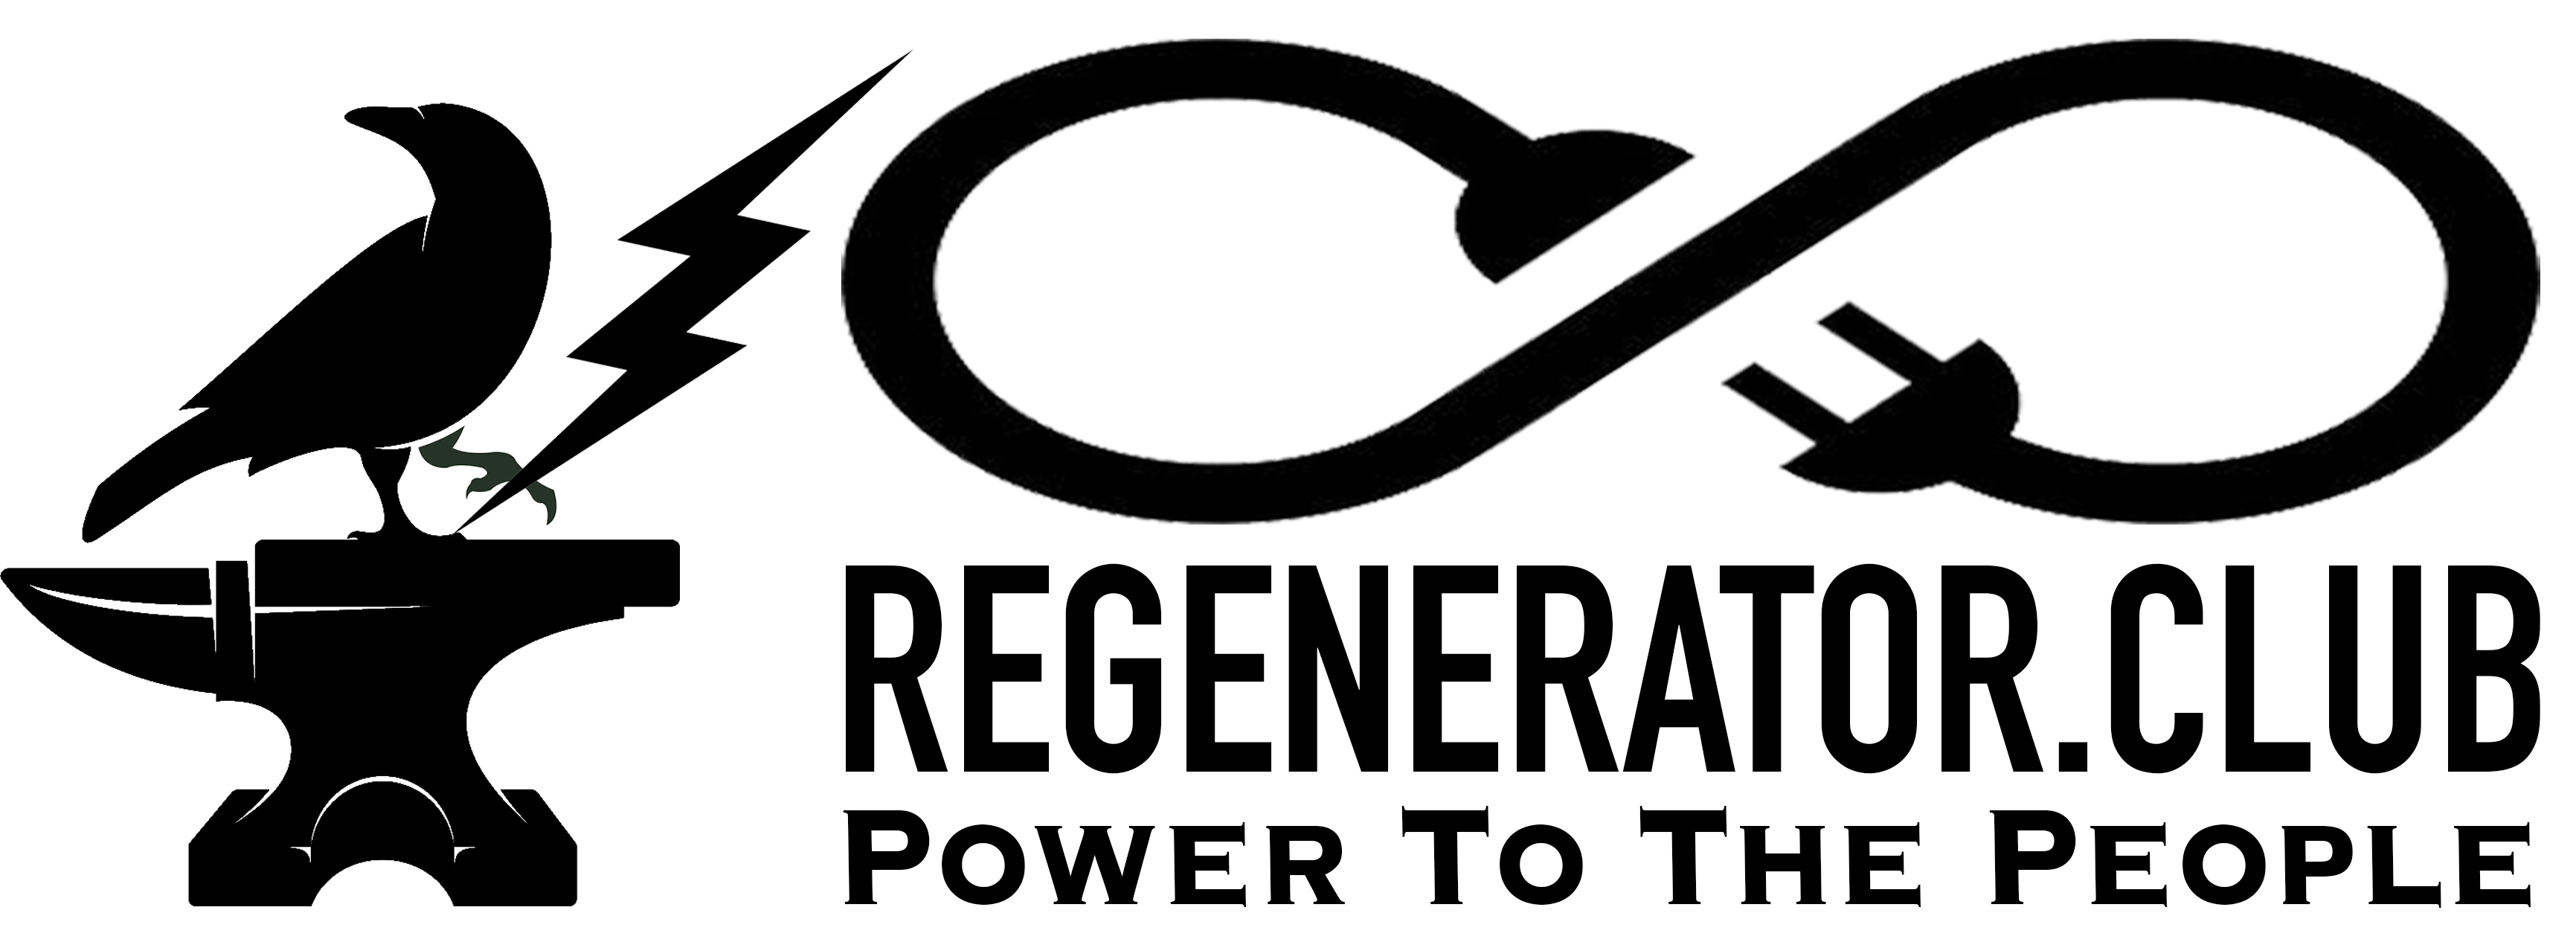 Regenerator Private Membership Association